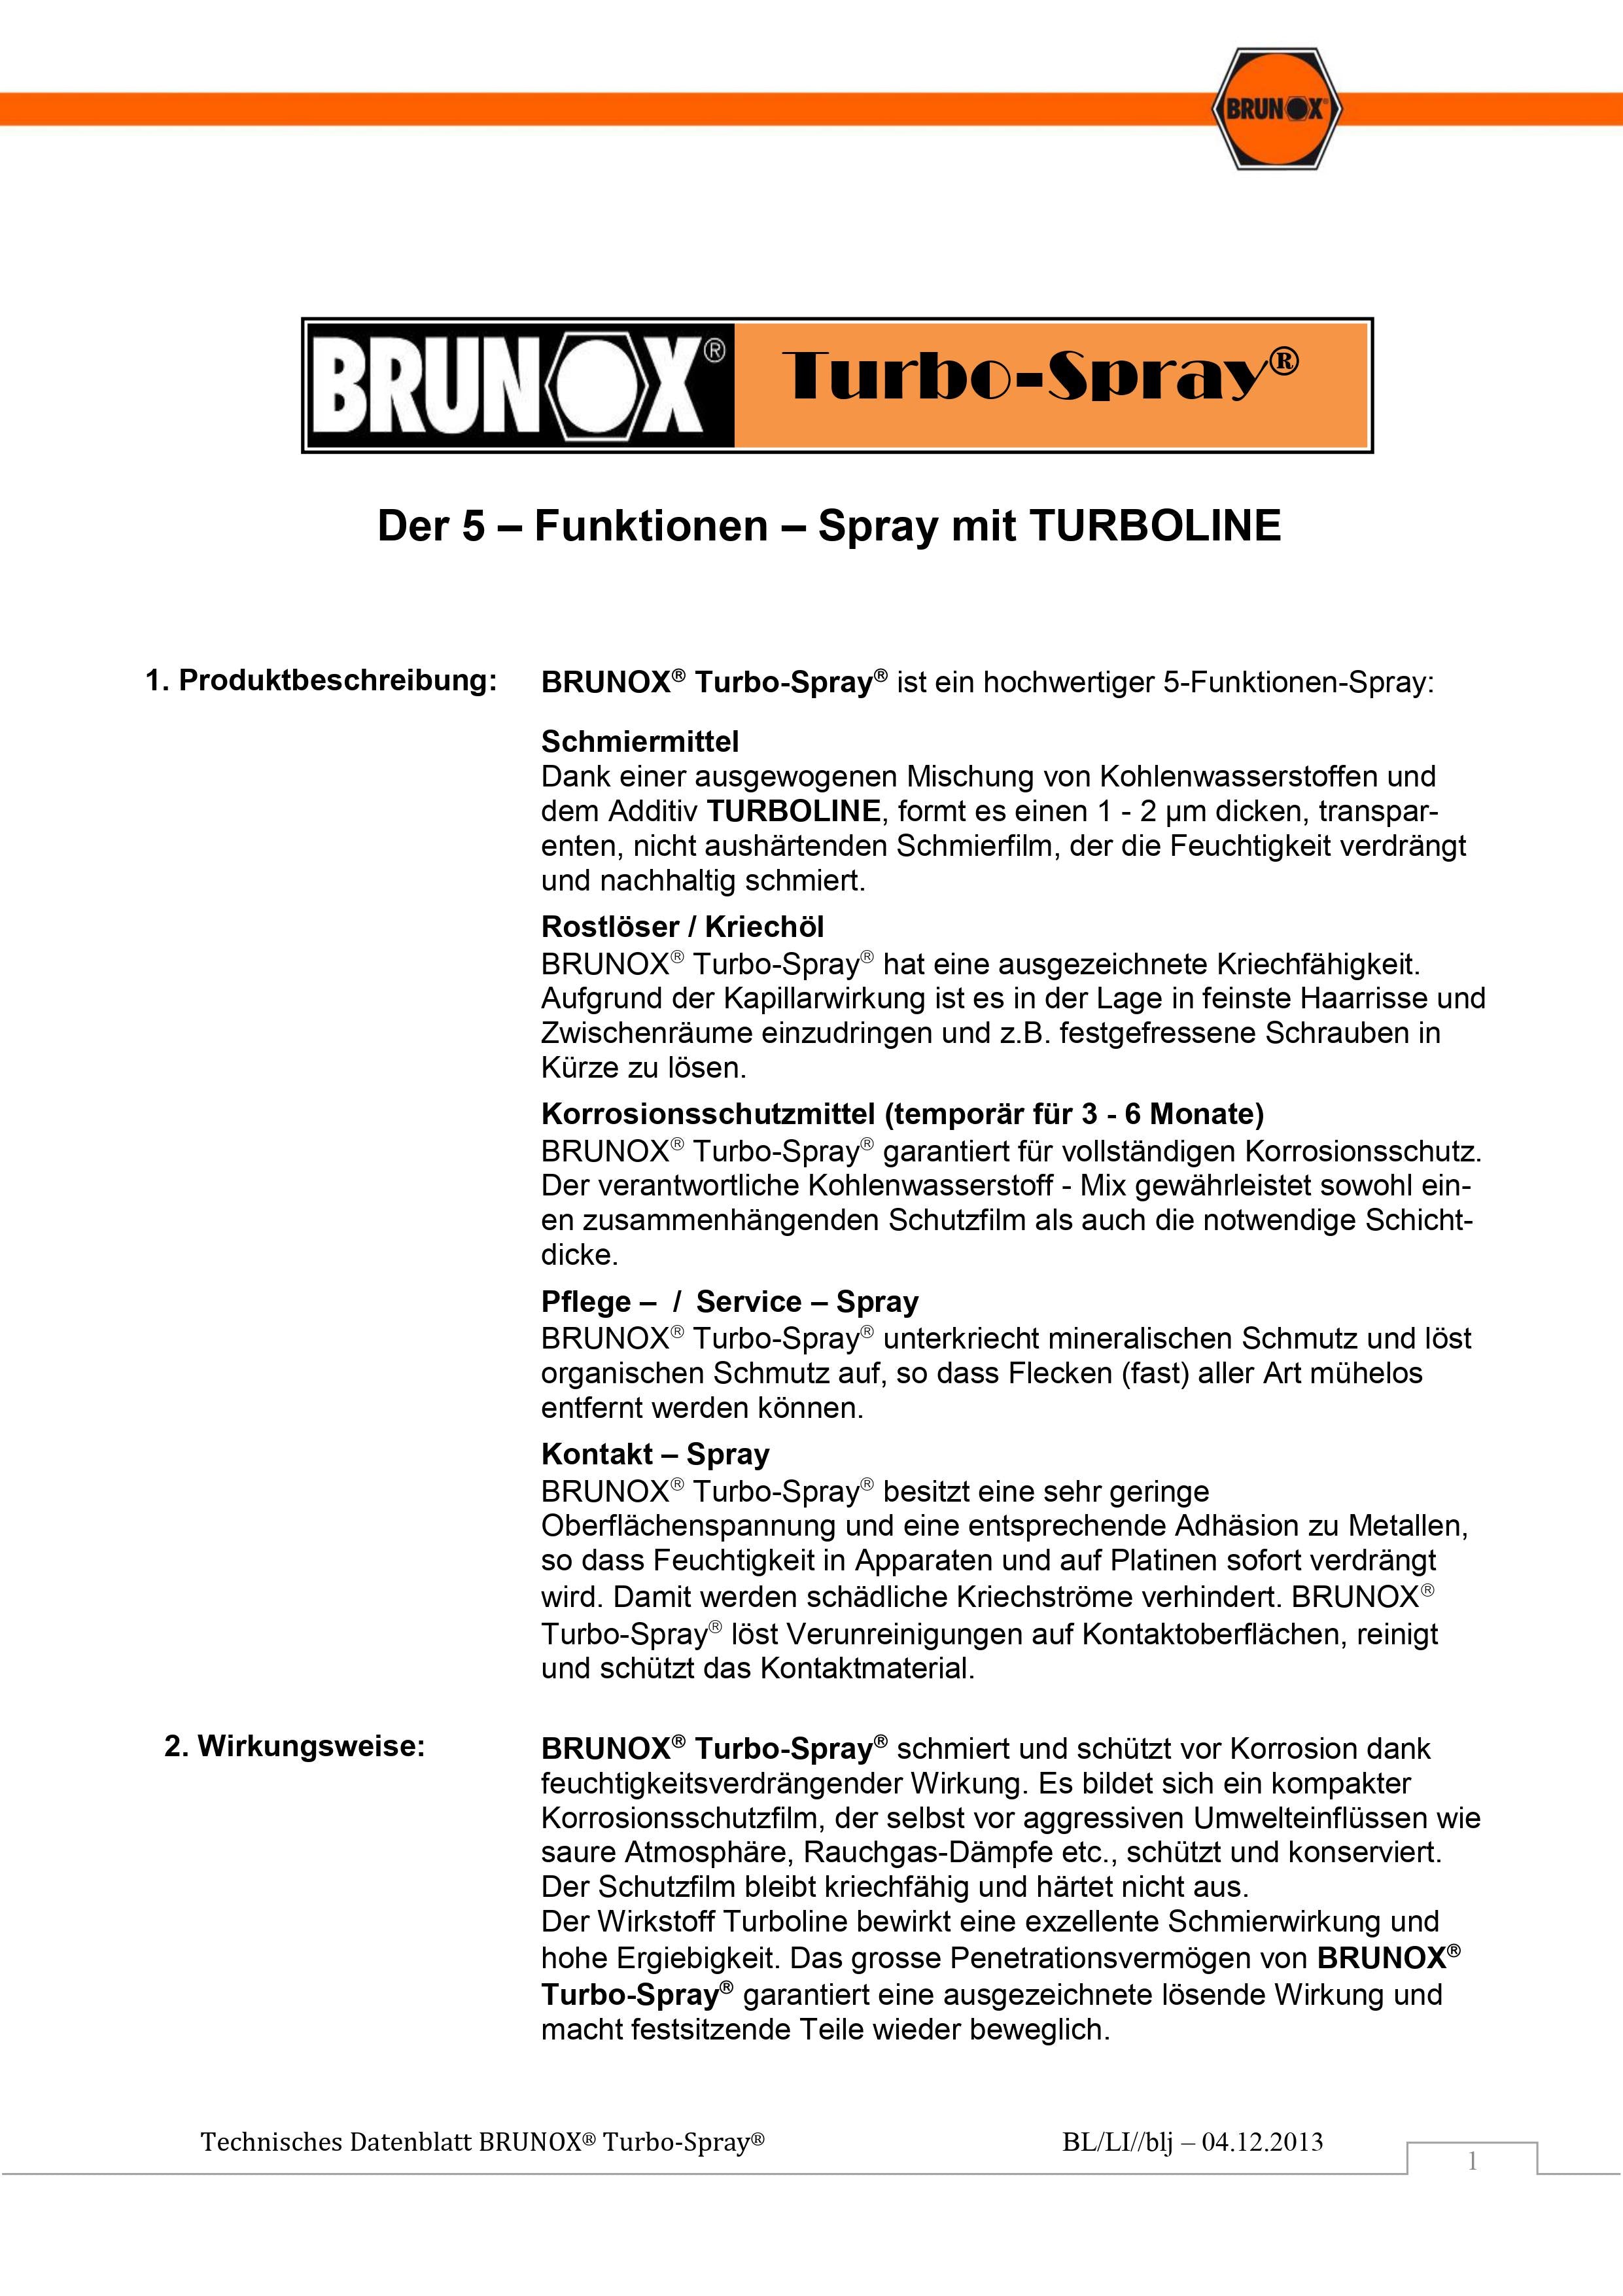 BRUNOX Turbo-Spray 100 ml Multifunktionsöl, Rostlöser, Kriechöl Schmiermittel